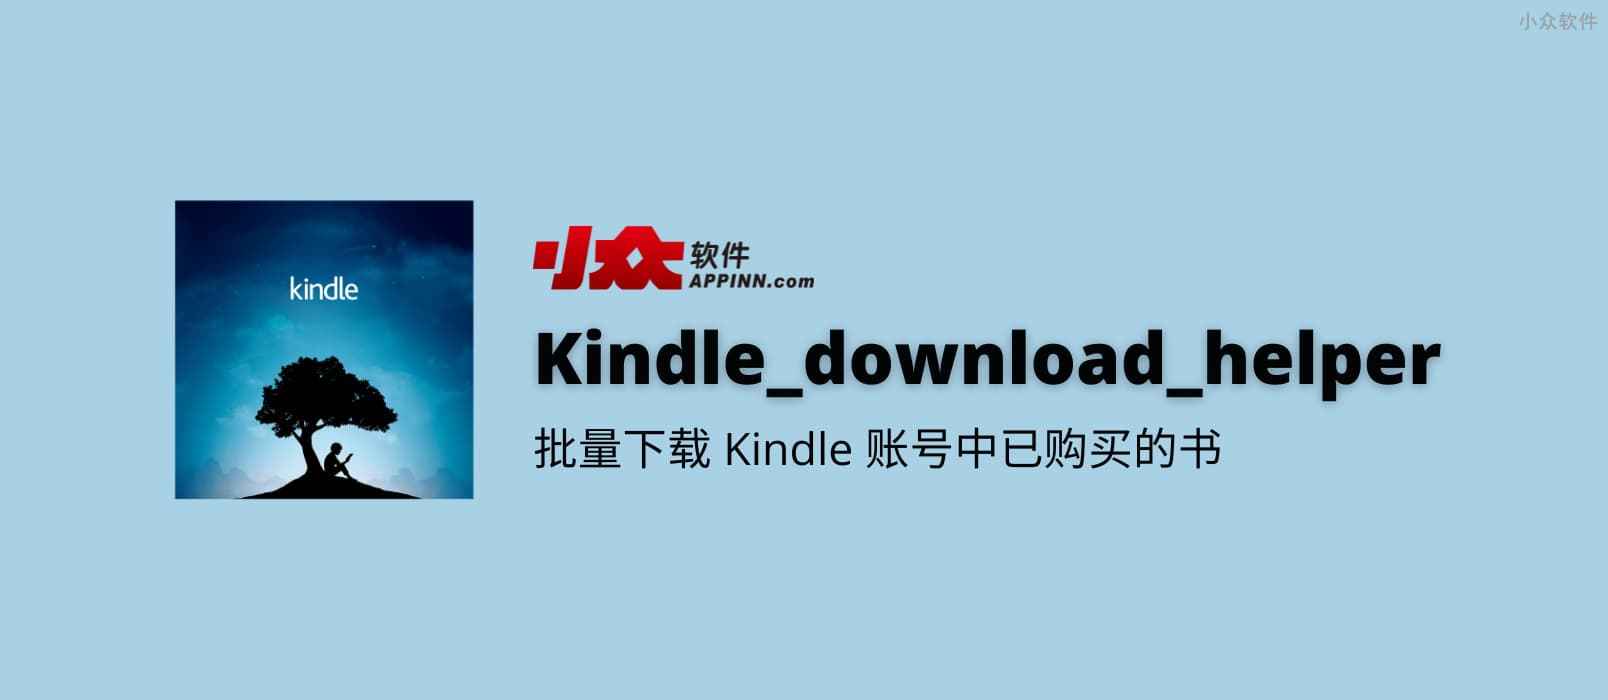 Kindle_download_helper - 批量下载 Kindle 账号中已购买的书